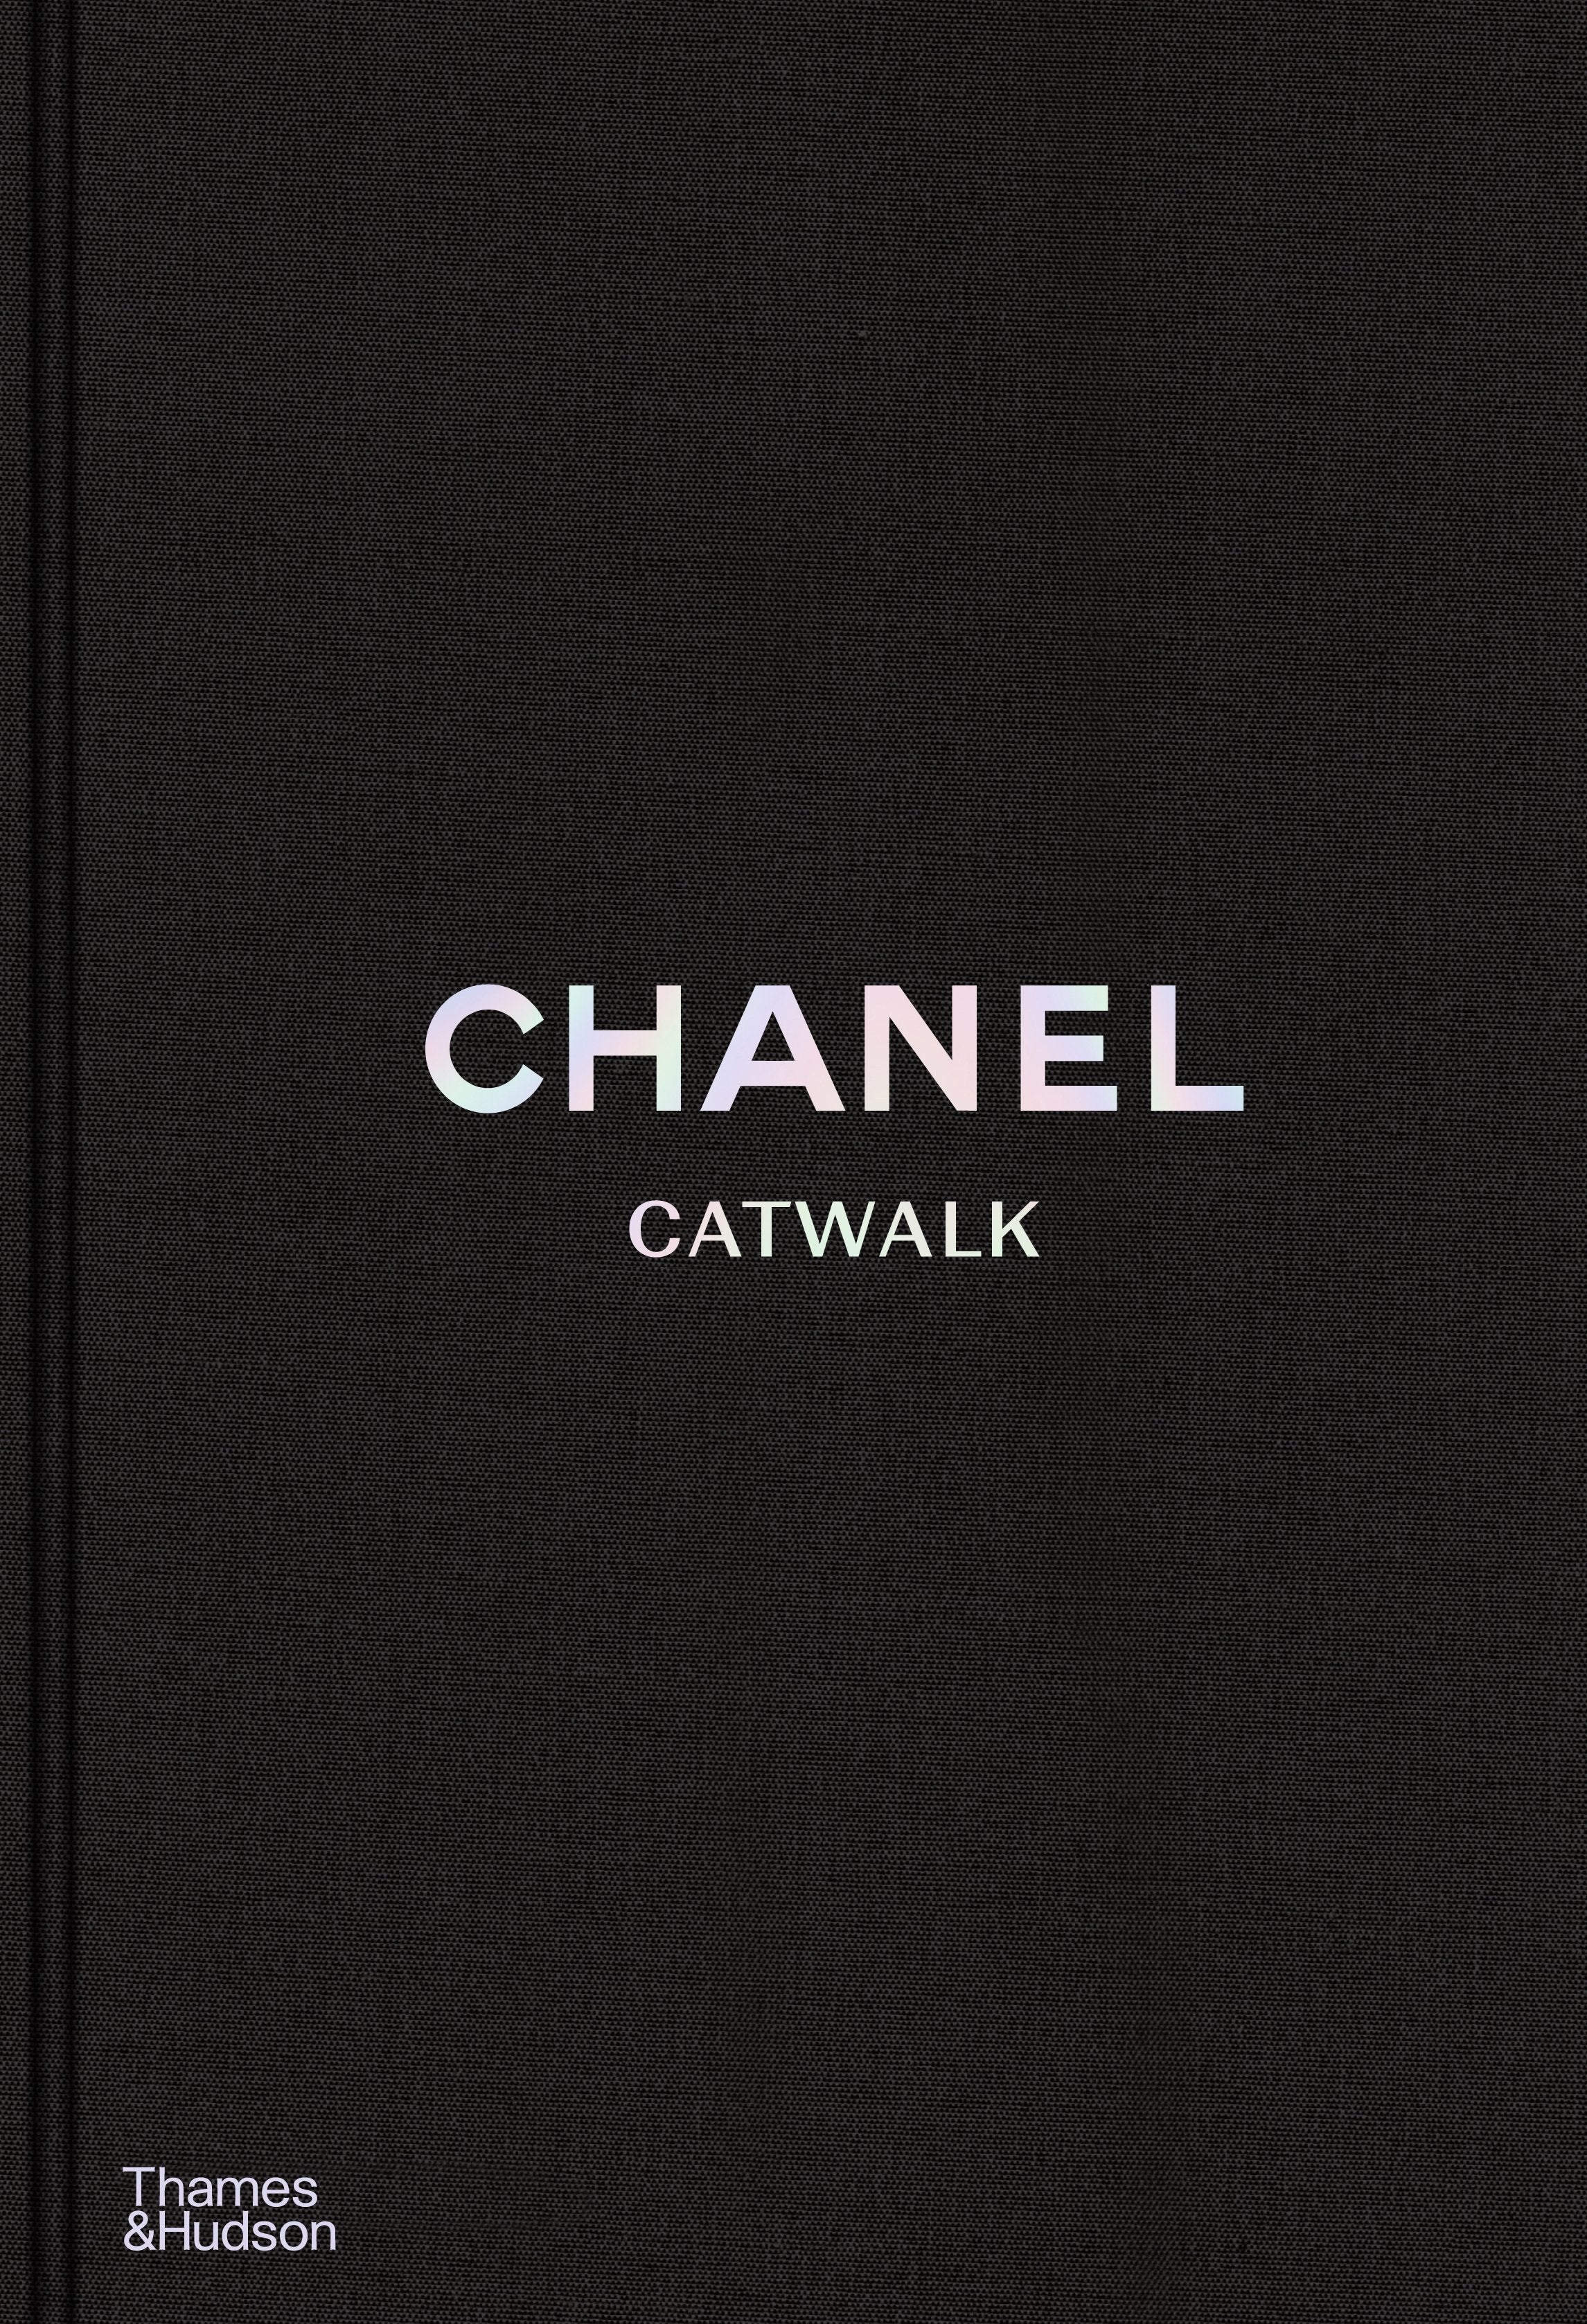 Chanel fashion show  Catwalk design, Glamorous chic life, Chanel fashion  show